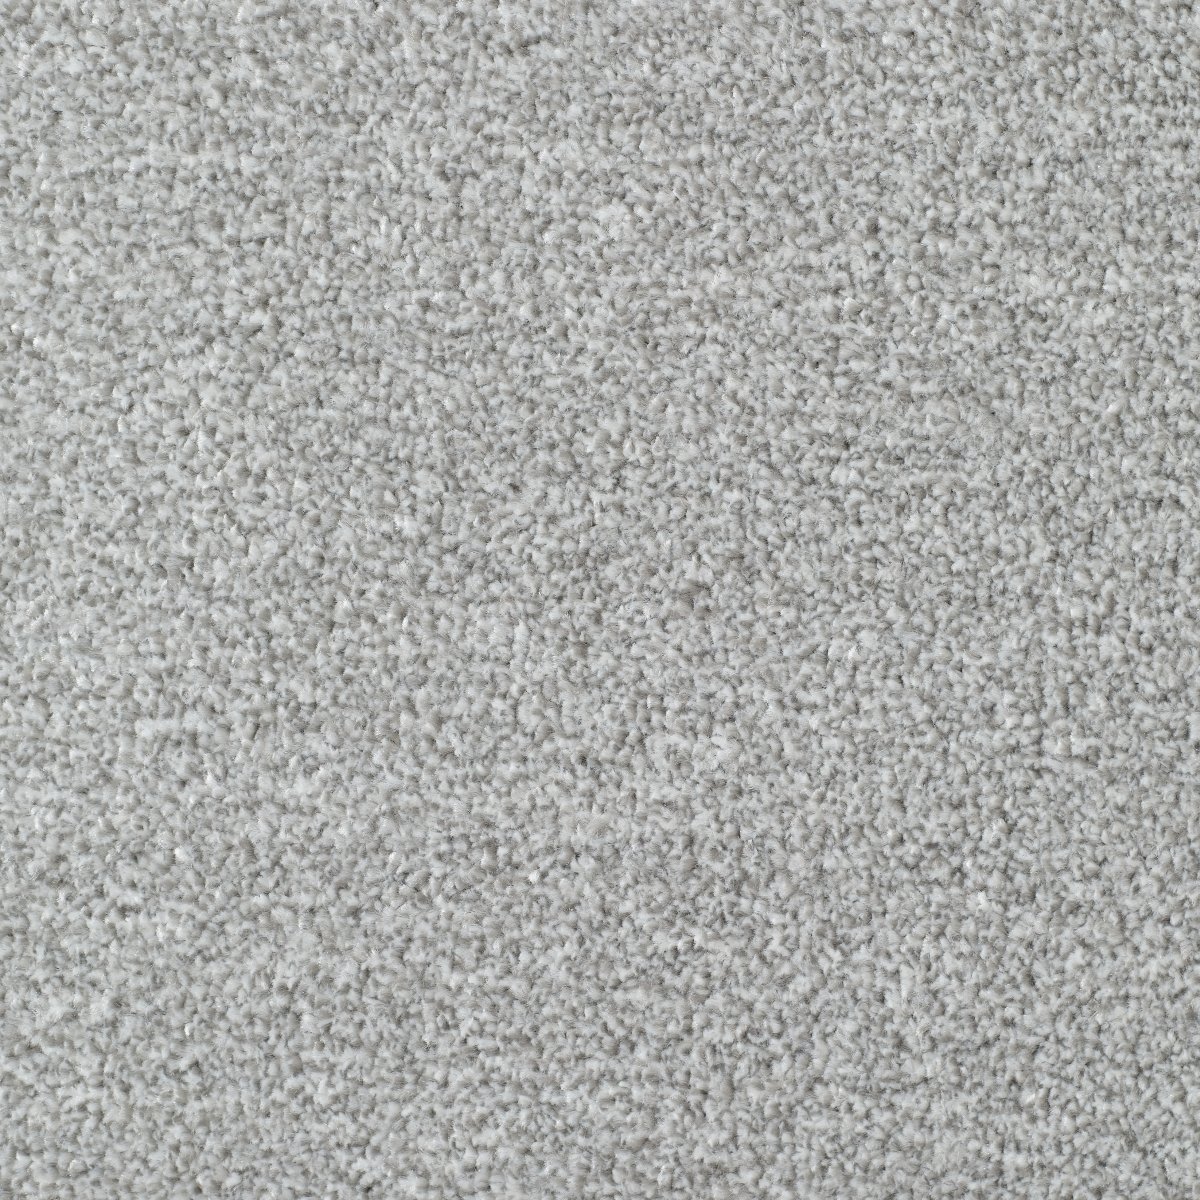 Seaton Valley Soft Deep Pile Saxony Carpet -  Silver